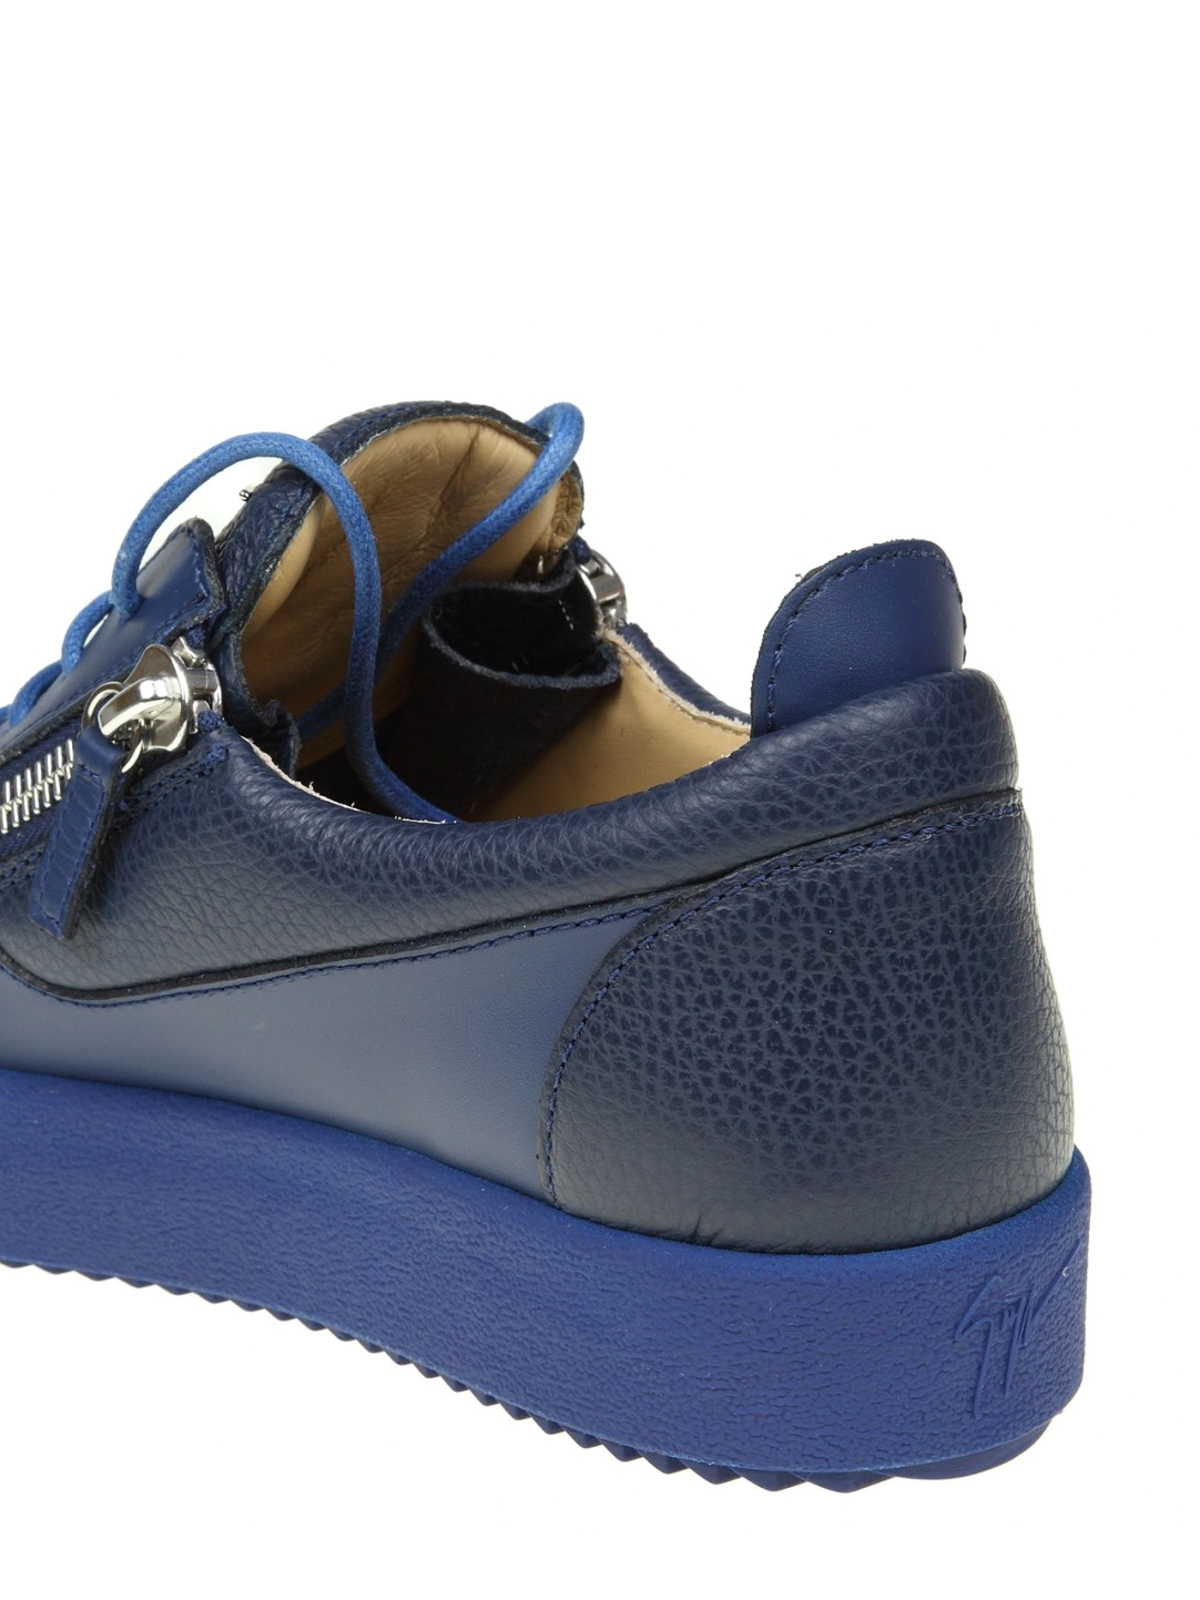 Kritisk Stræbe ring Trainers Giuseppe Zanotti - Frankie blue leather sneakers - RU70000052